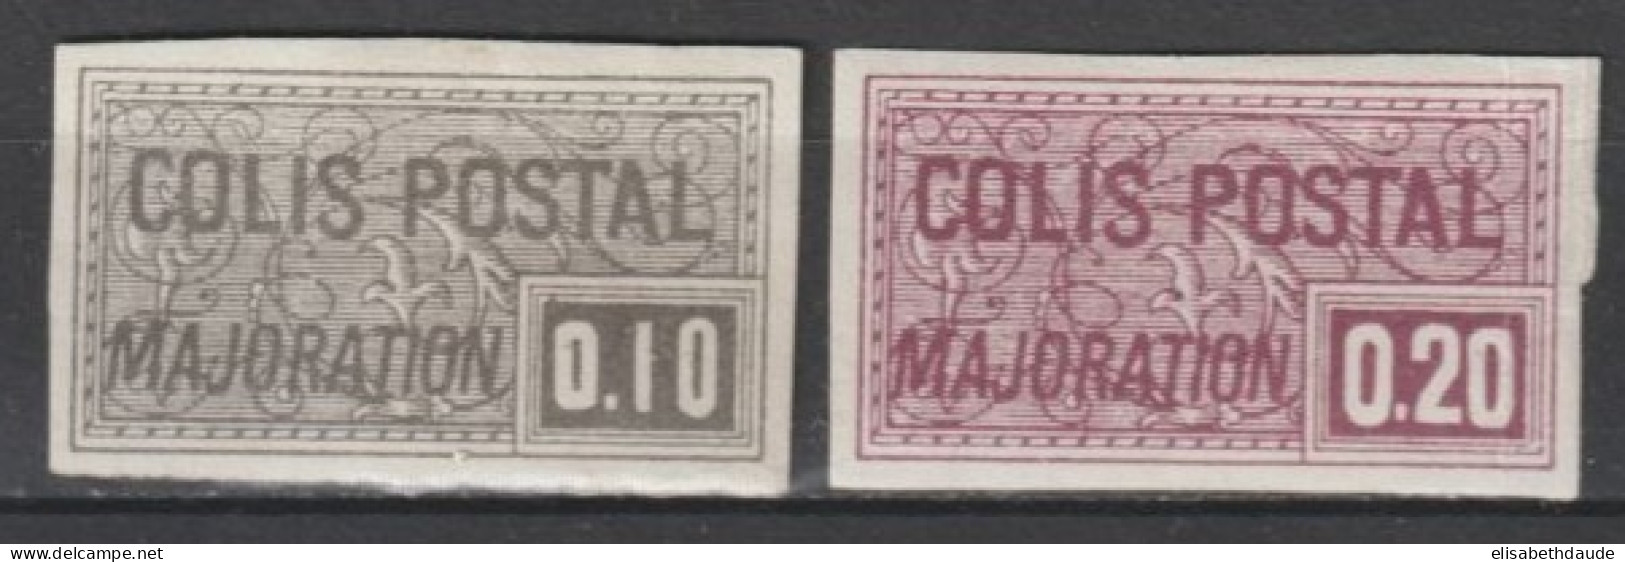 COLIS POSTAUX - 1938 - YVERT N° 155+158 VARIETE NON DENTELES ! * MH - COTE MAURY 2009 = 82 EUR. - Nuevos